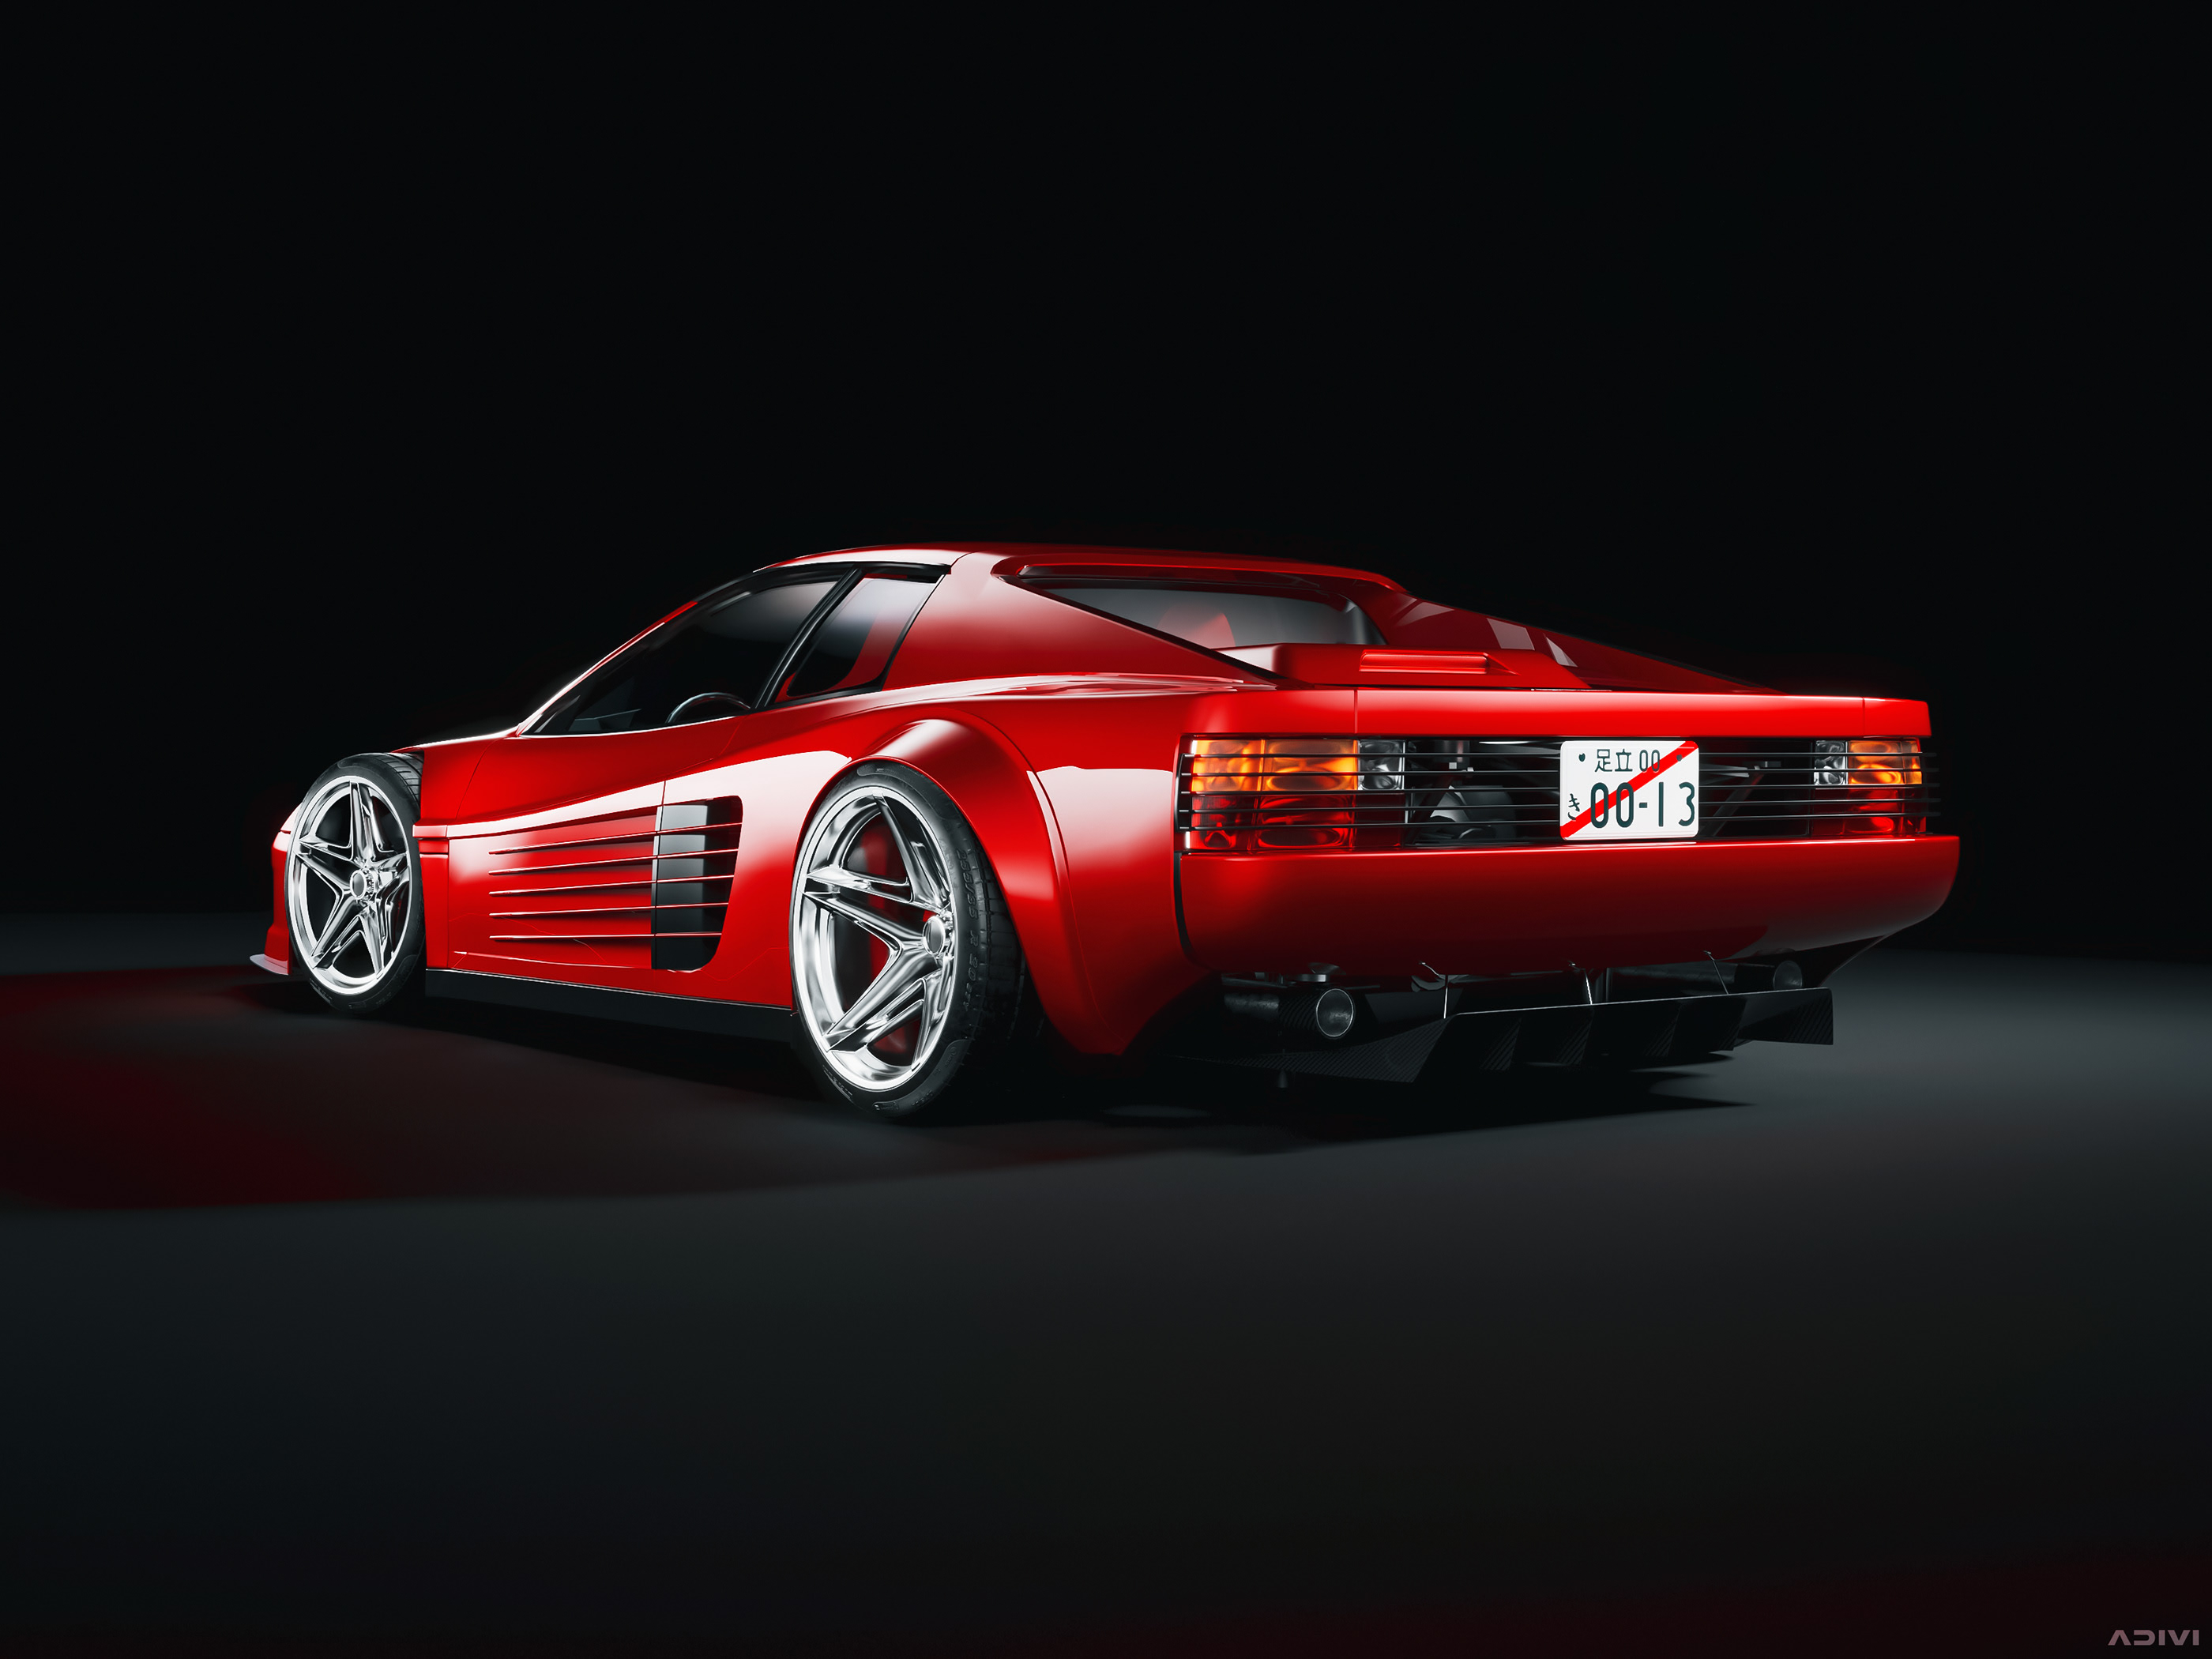 General 2800x2100 Ferrari Ferrari Testarossa concept art concept cars digital art CGI artwork red cars car vehicle supercars italian cars Stellantis